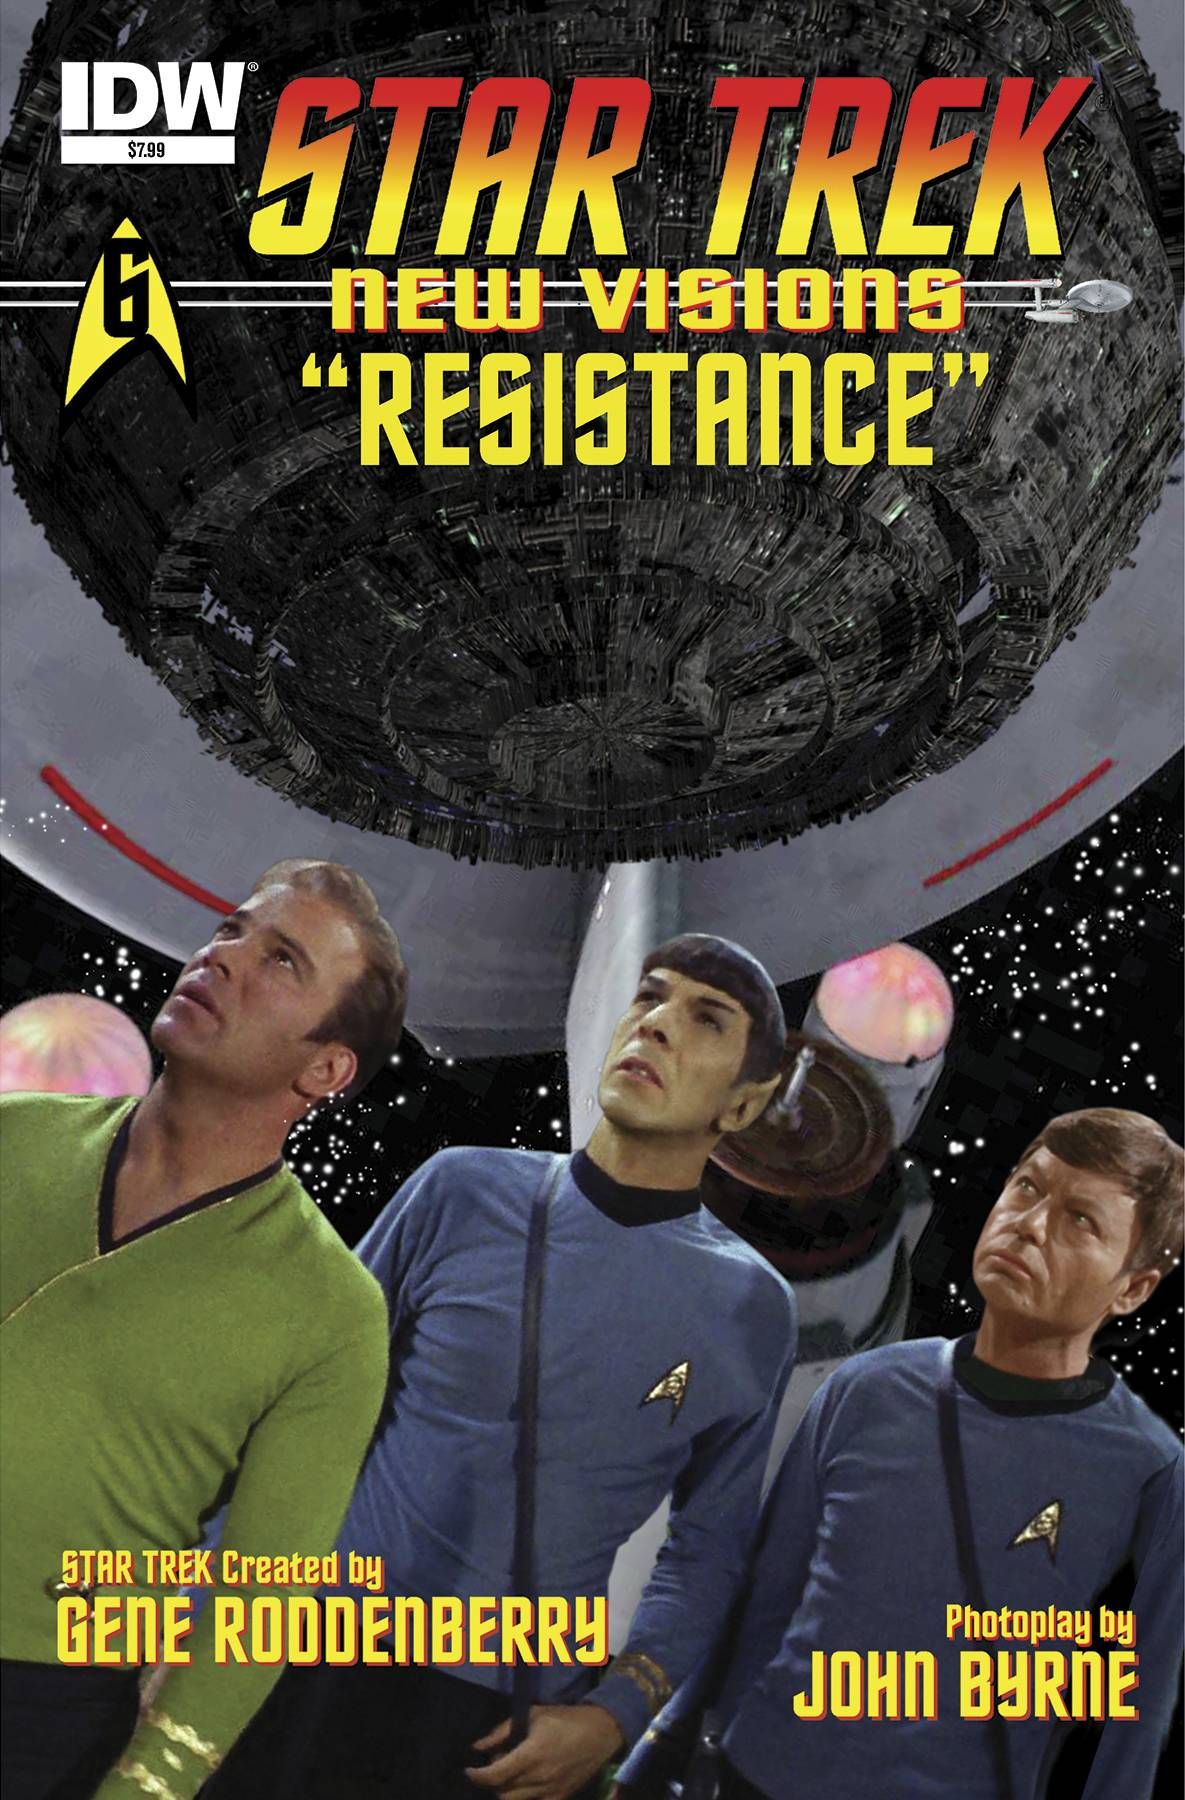 Star Trek: New Visions #6 (Resistance) Comic